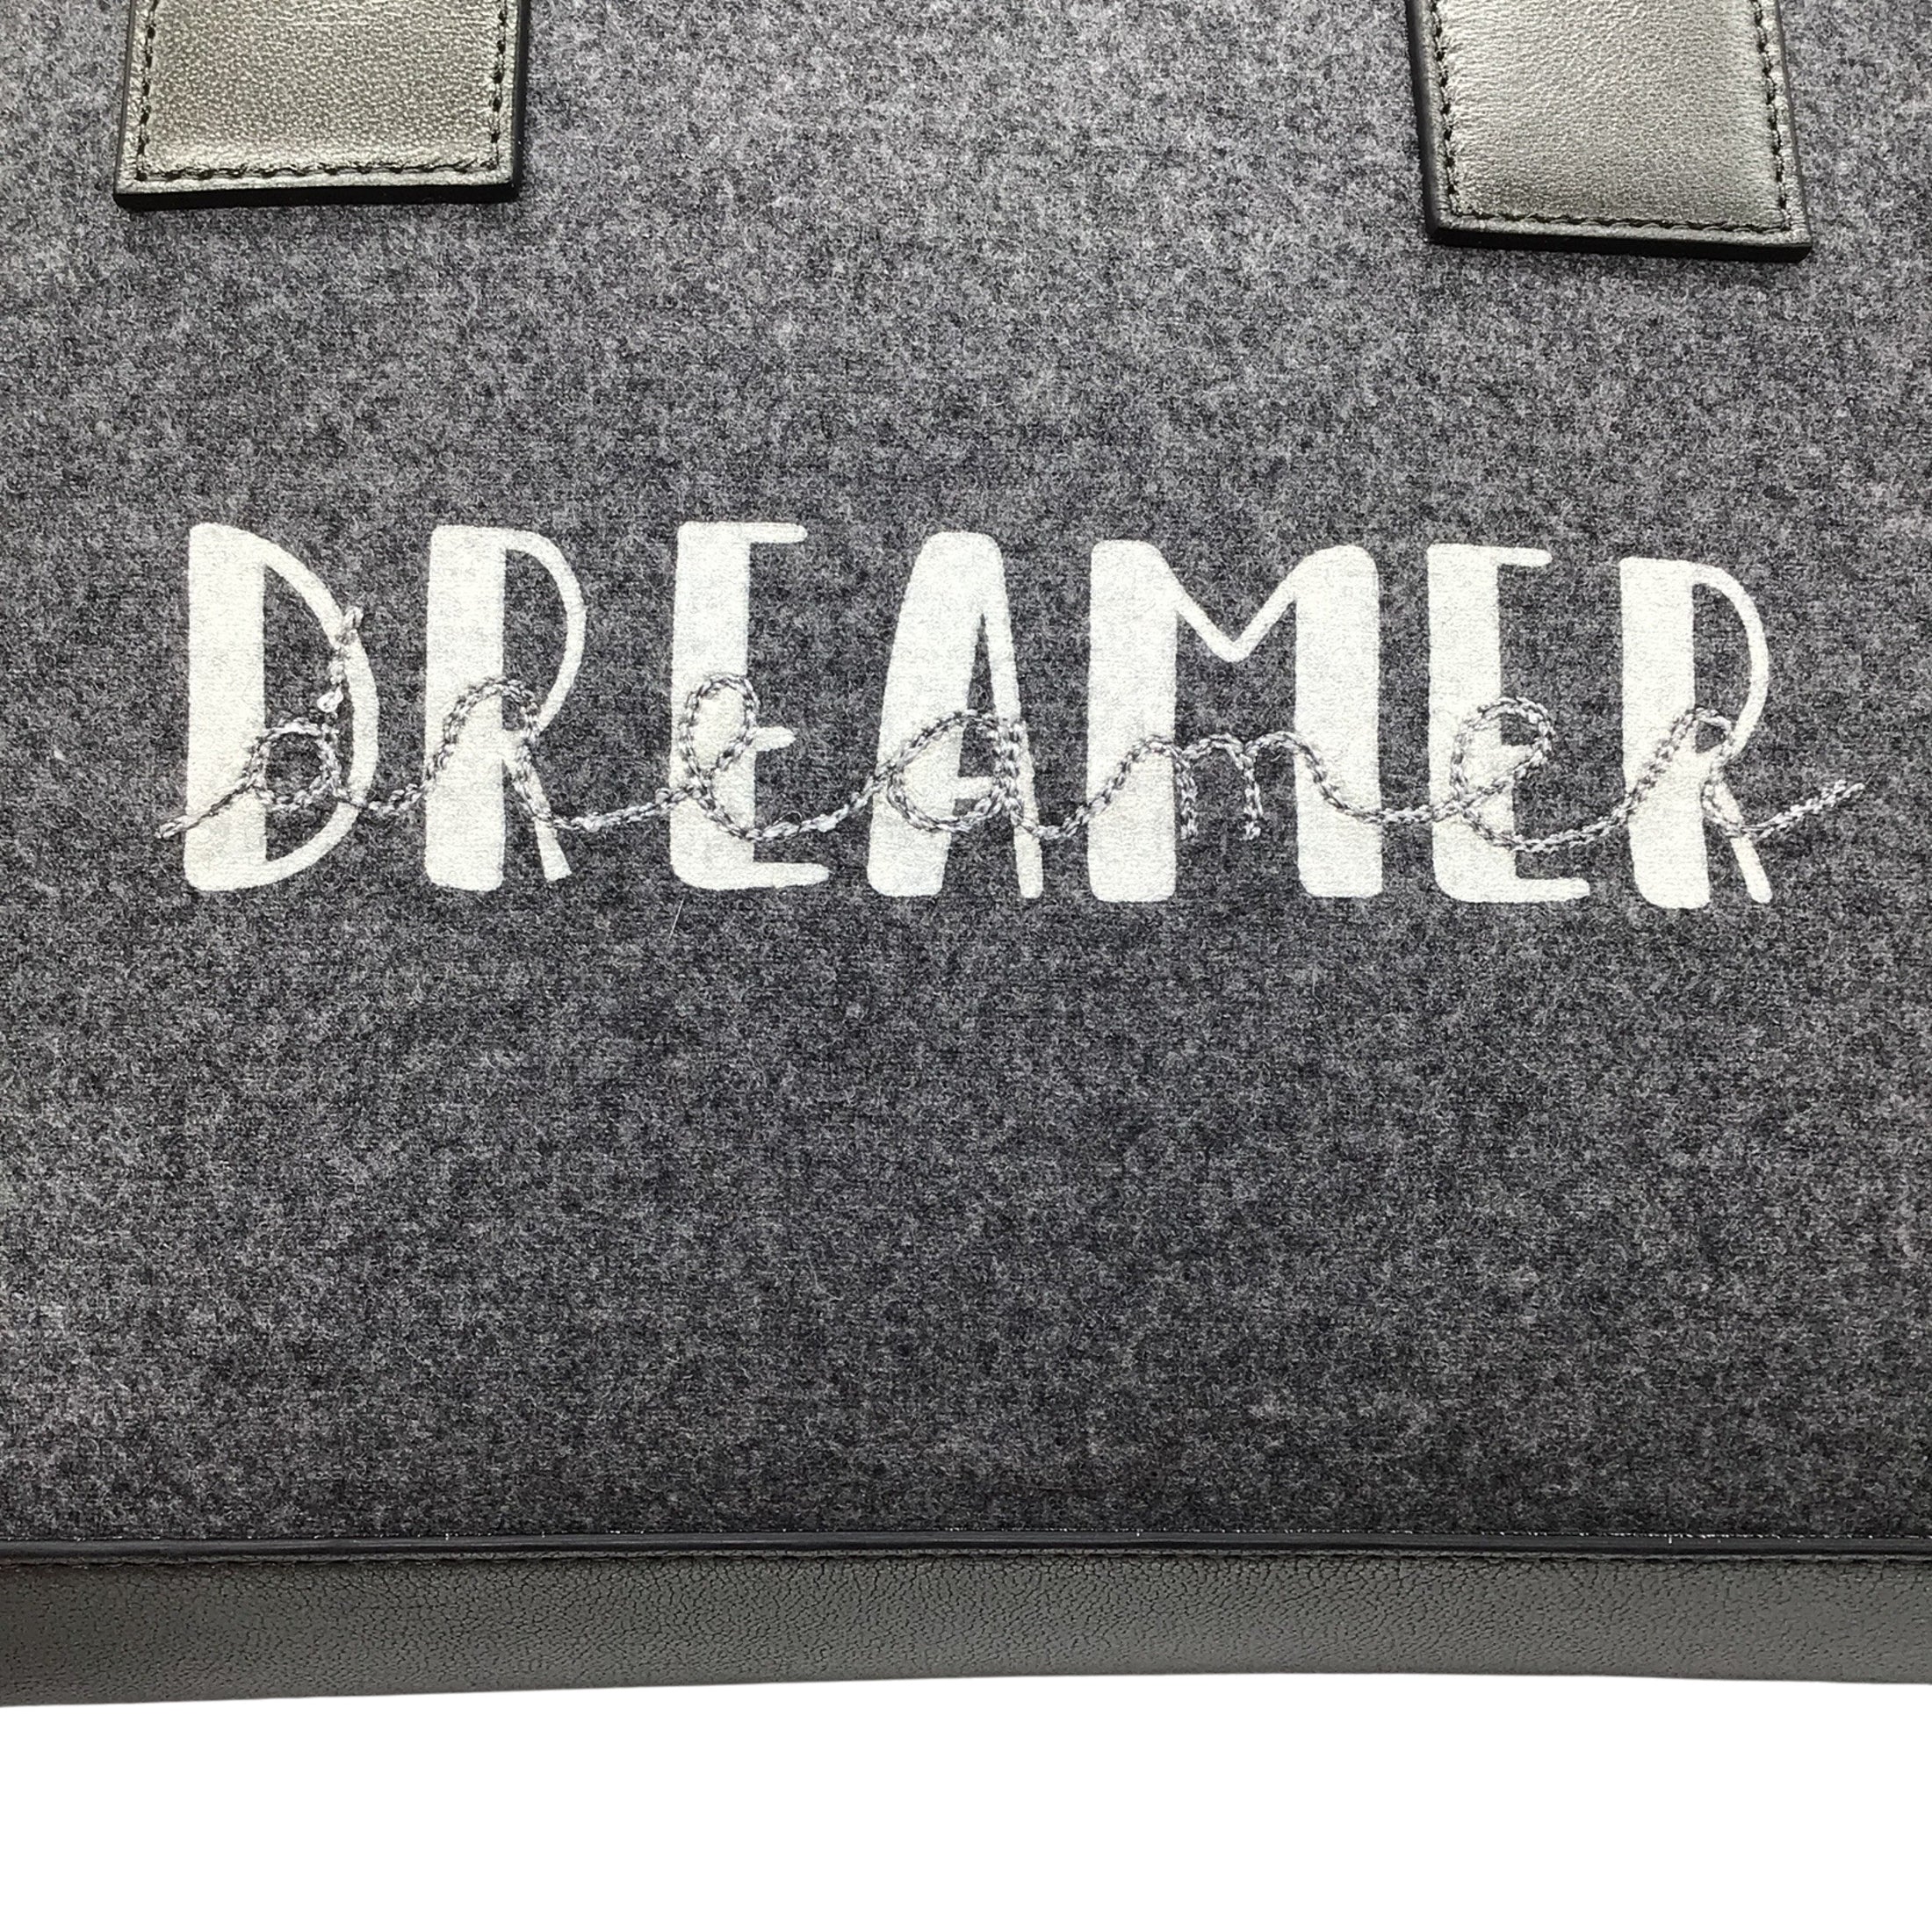 Brunello Cucinelli Grey Leather Trimmed Wool Dreamer Tote Handbag